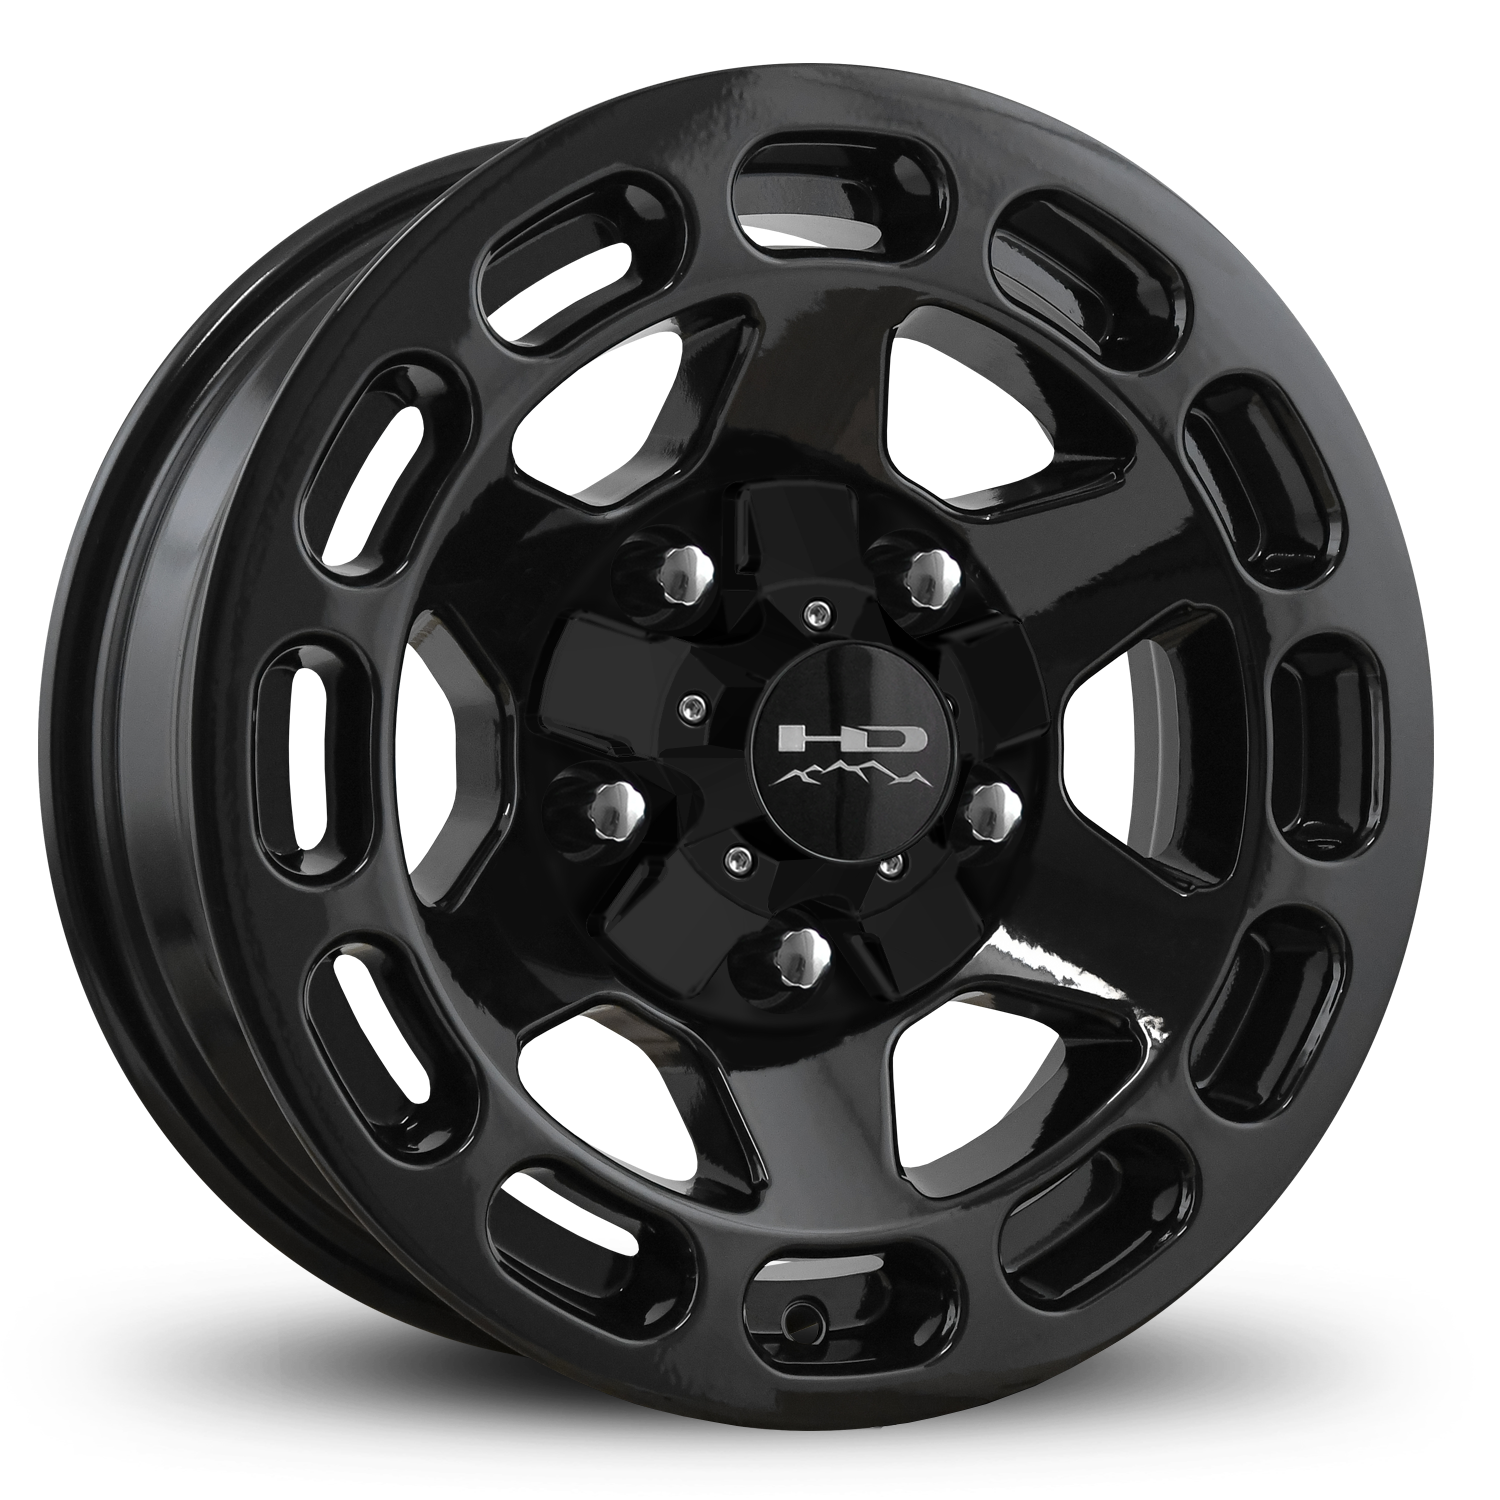 HD Off-Road Patriot Custom Trailer Wheels in 15x6.0 in 5 lug All Gloss Black for Unility, Boat, Car, Construction, Horse, & RV